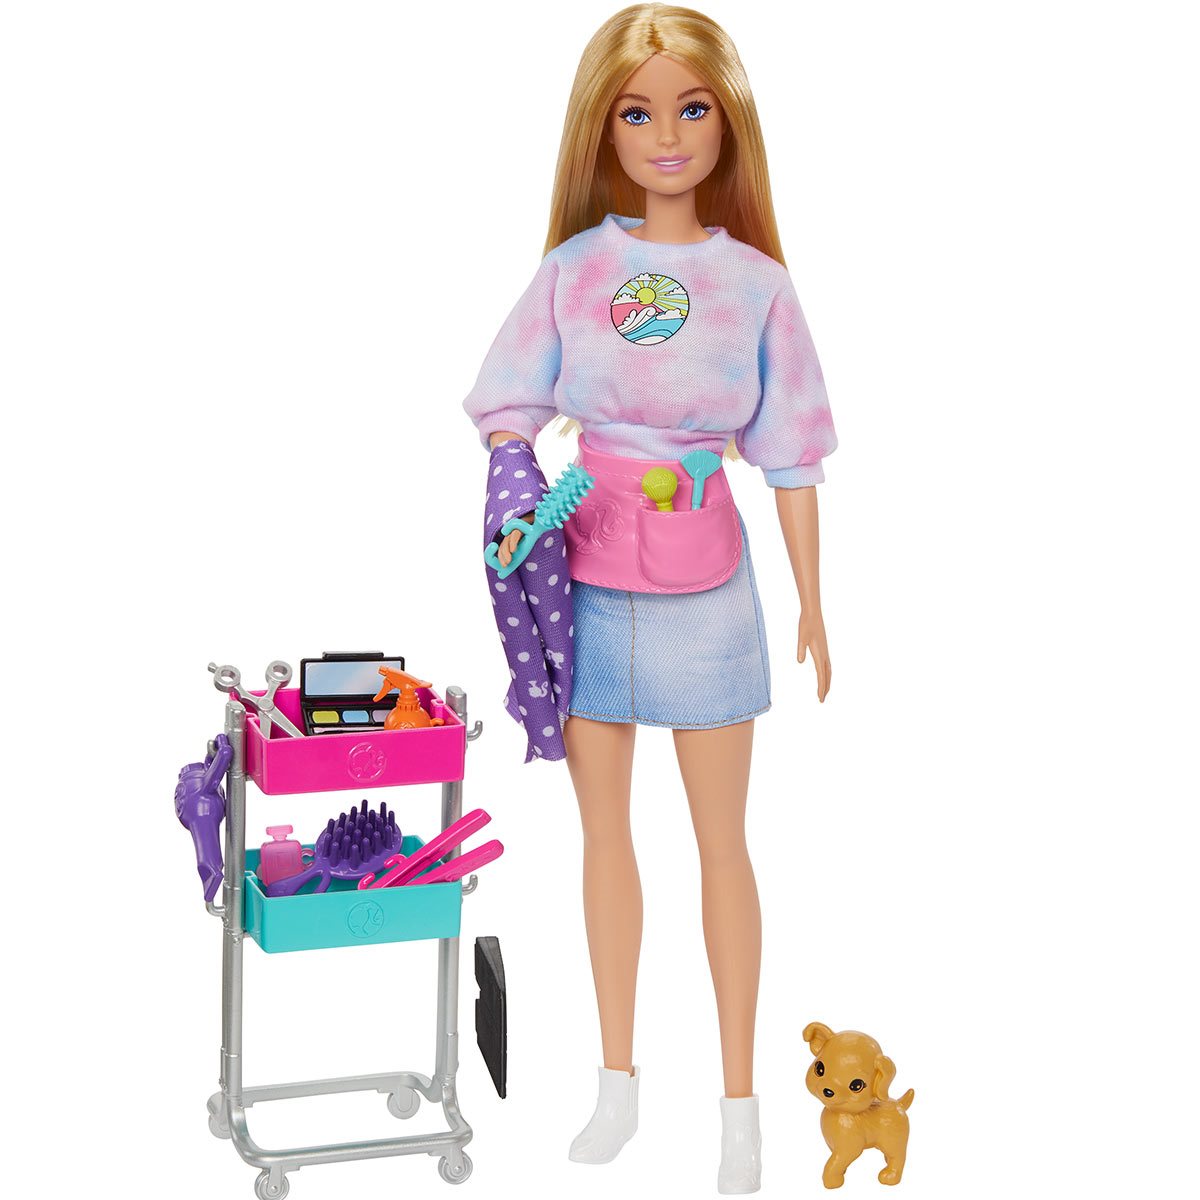 Barbie Malibu Roberts Stylist Doll - Entertainment Earth